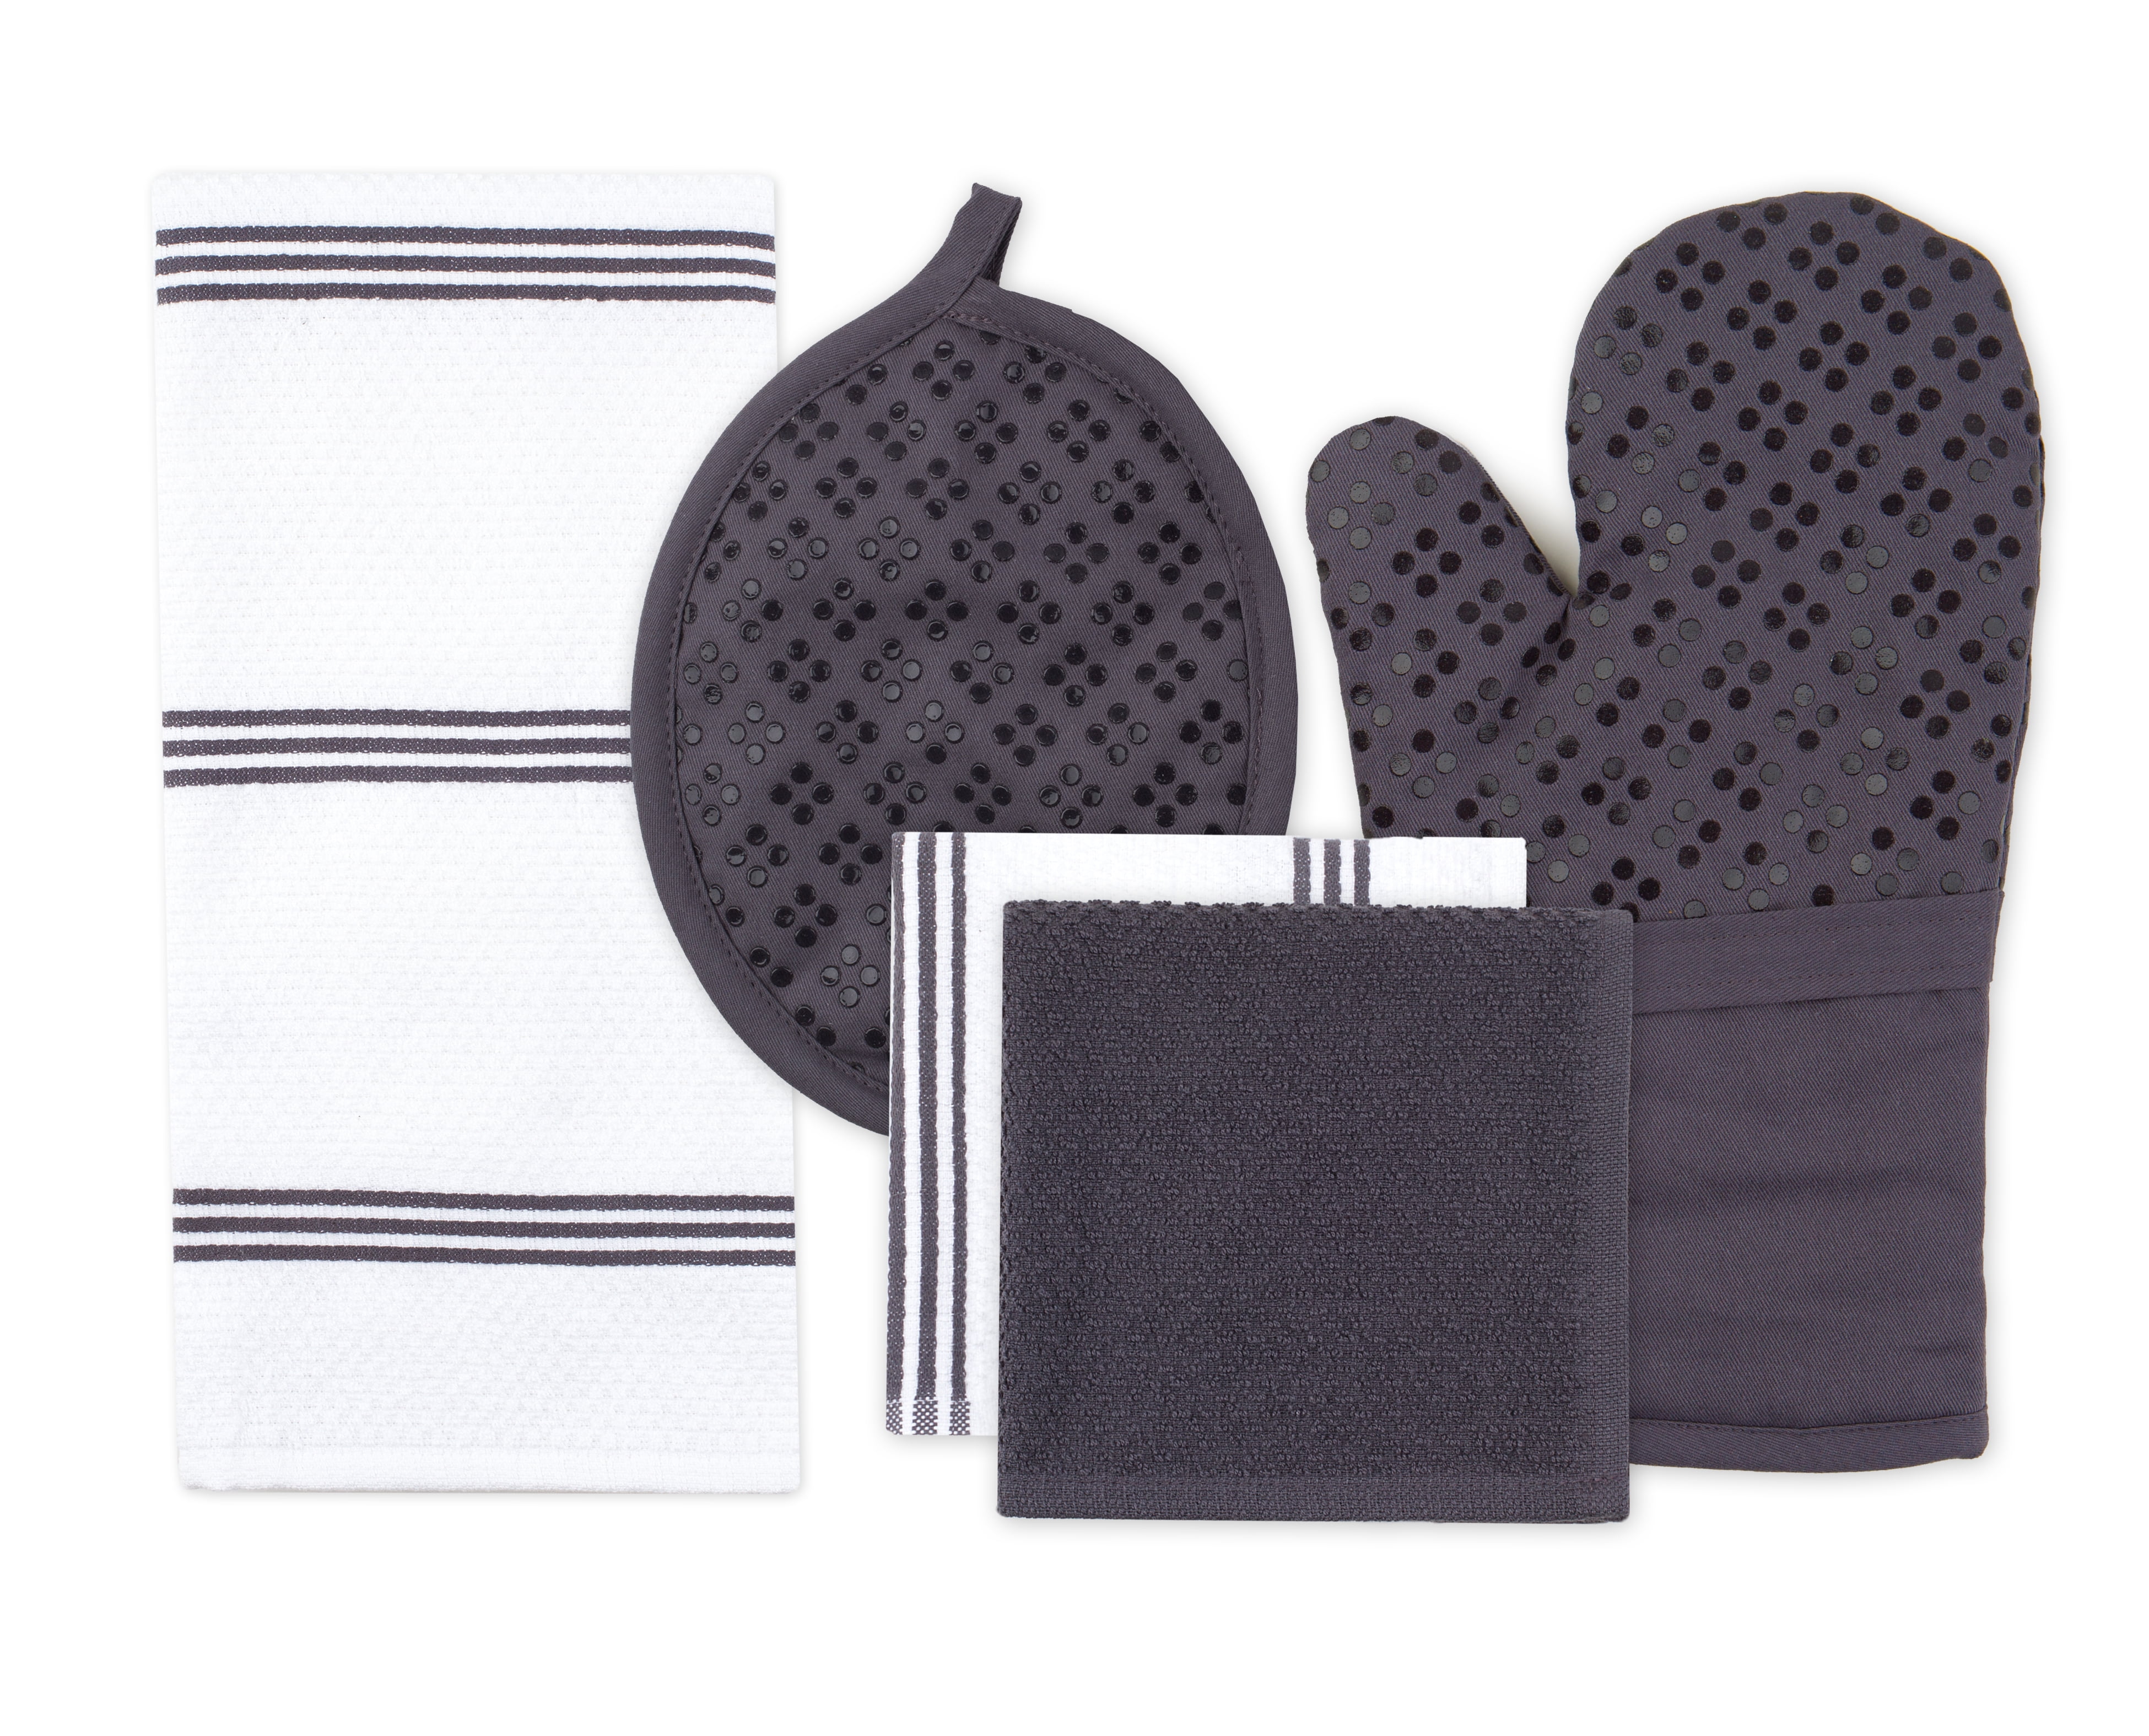 Robin Print Double Oven Gloves - oven mitt - pot holder - Christmas -  kitchenware - kitchen textiles - baking mitts - patterned